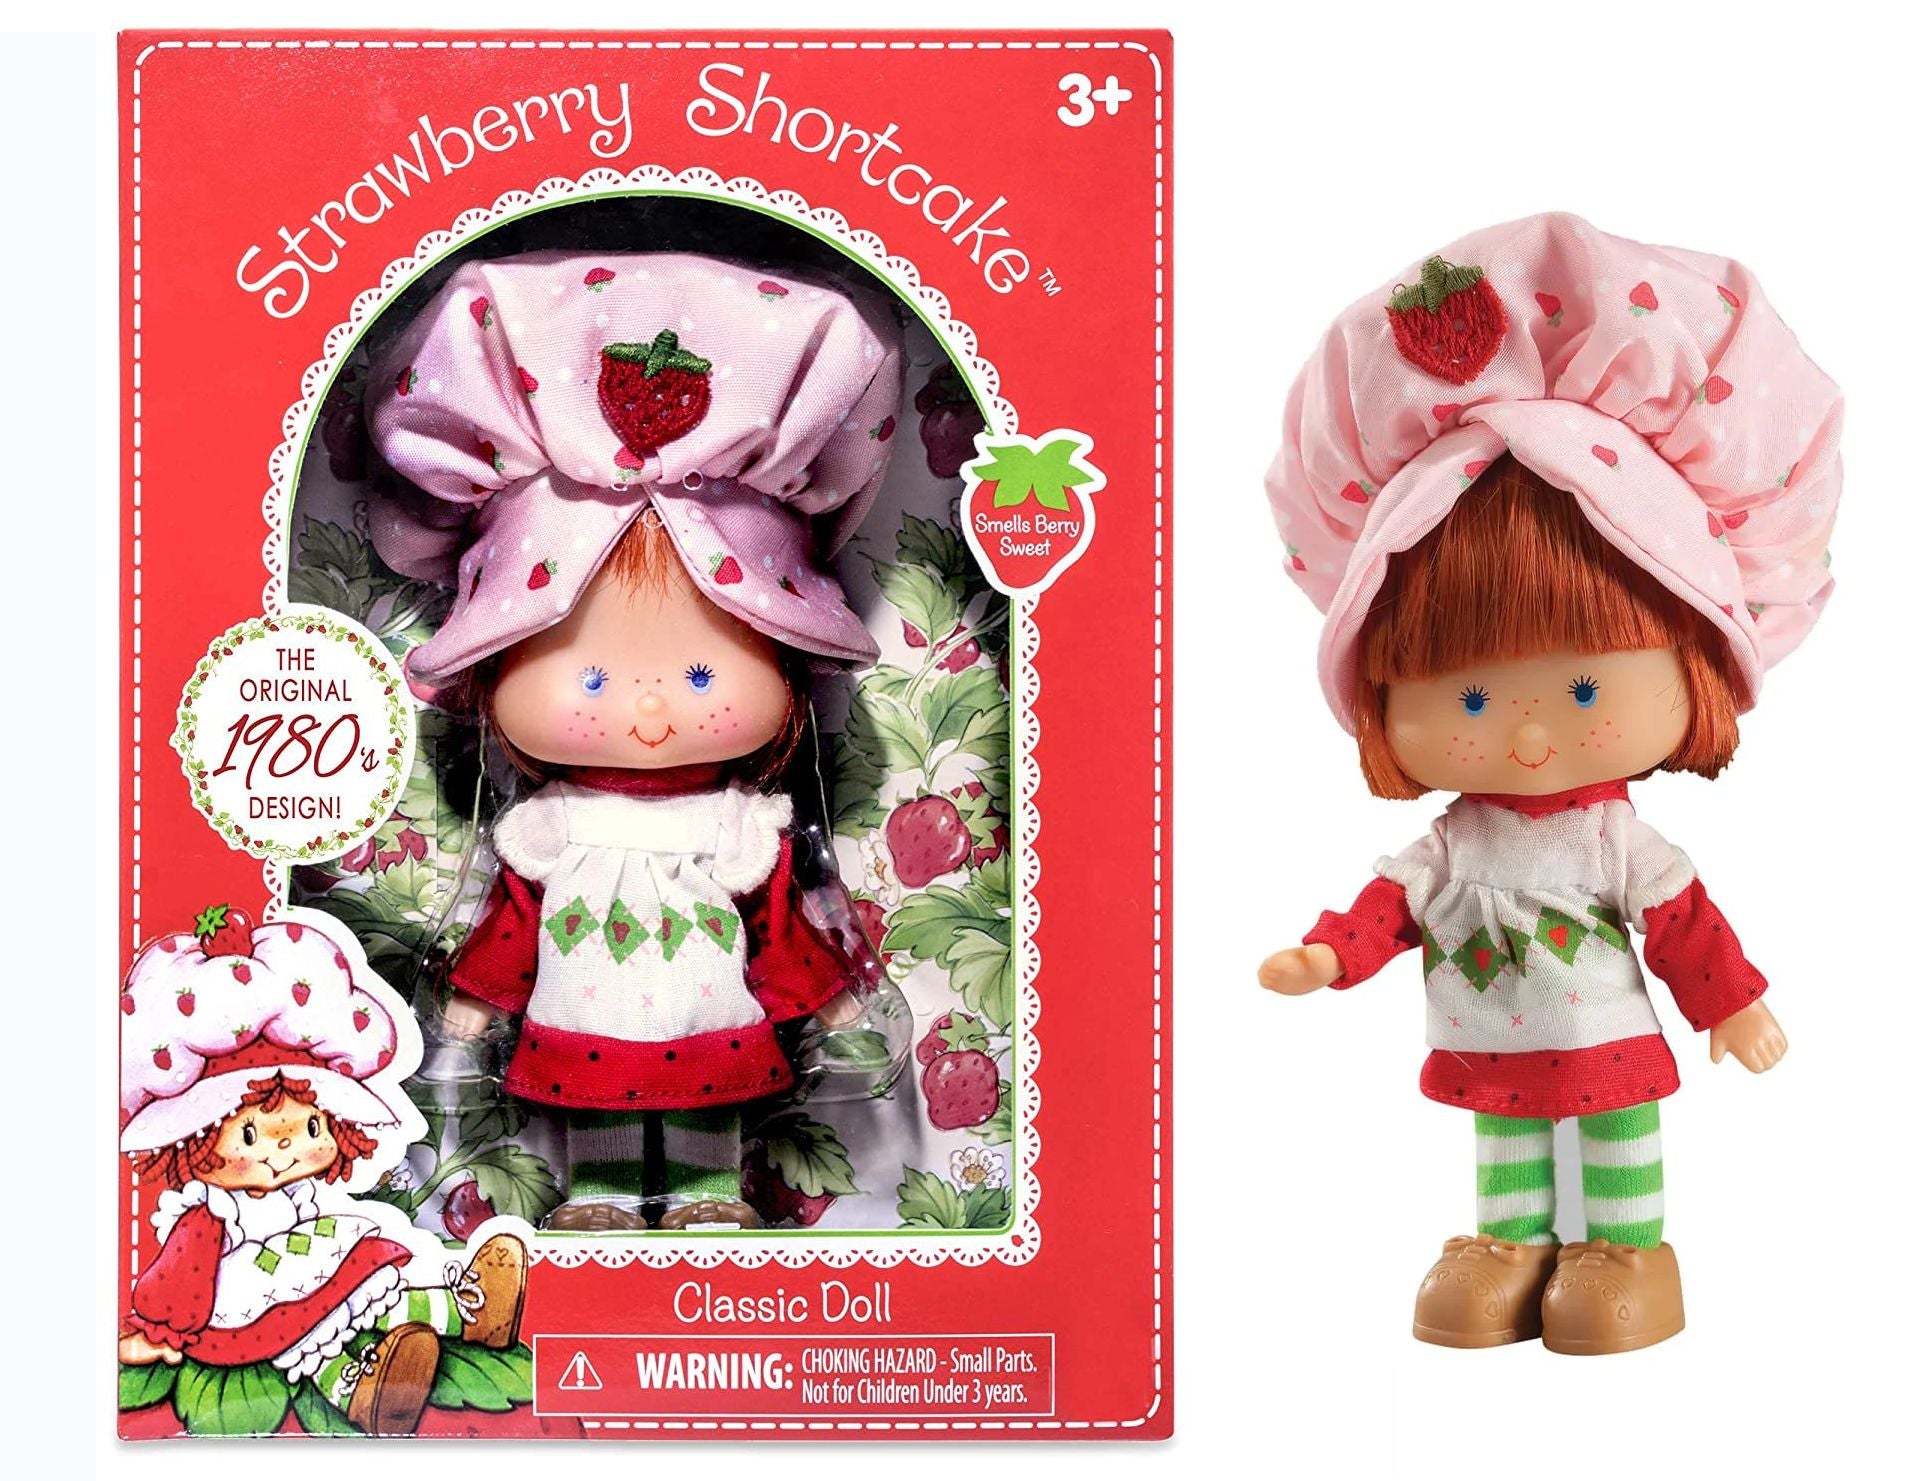 strawberry shortcake figurines